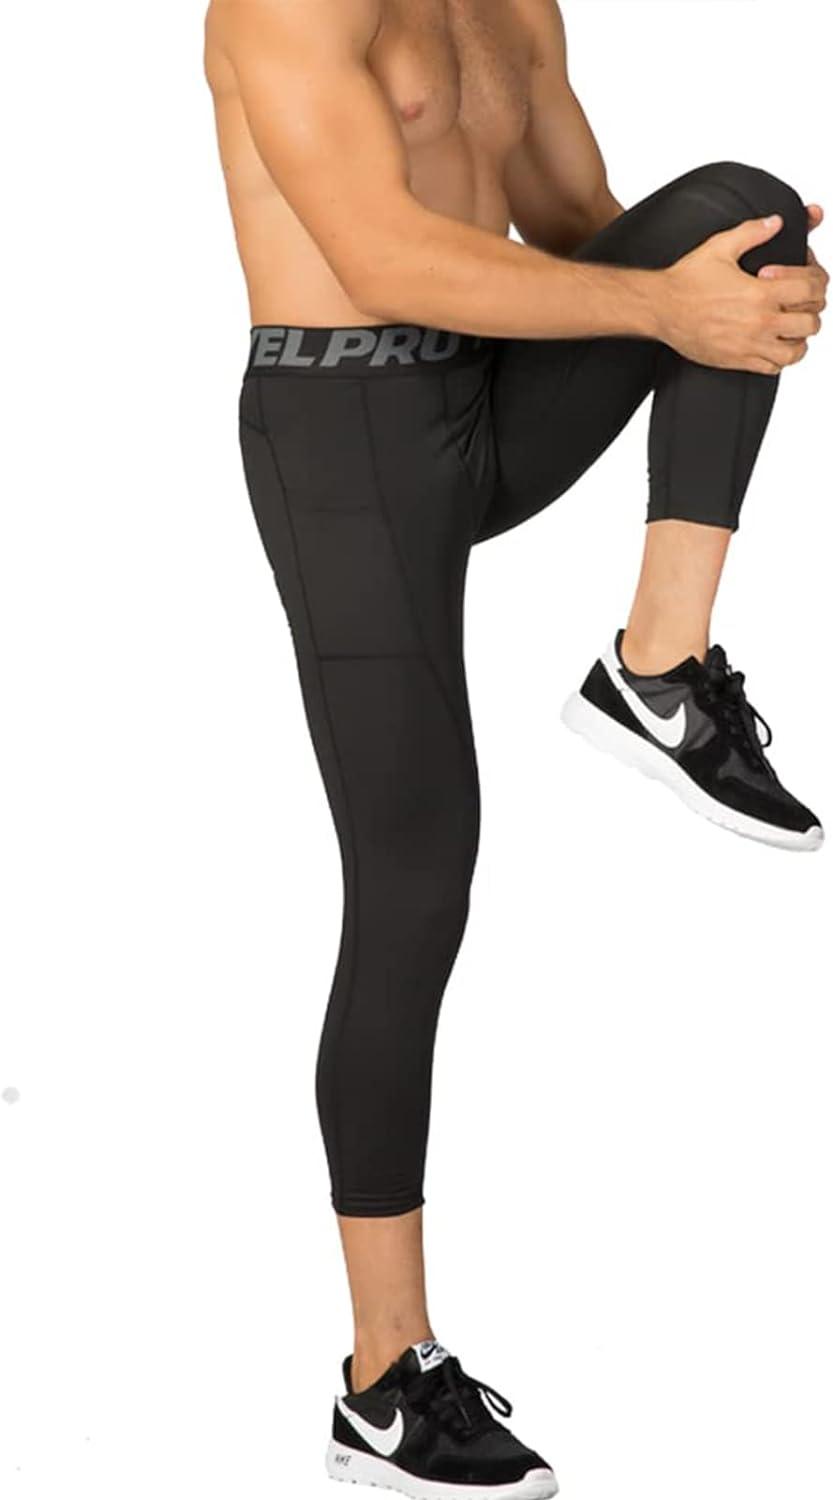 Boys Nike pro spandex 3/4 Running Compression Tights Medium Black